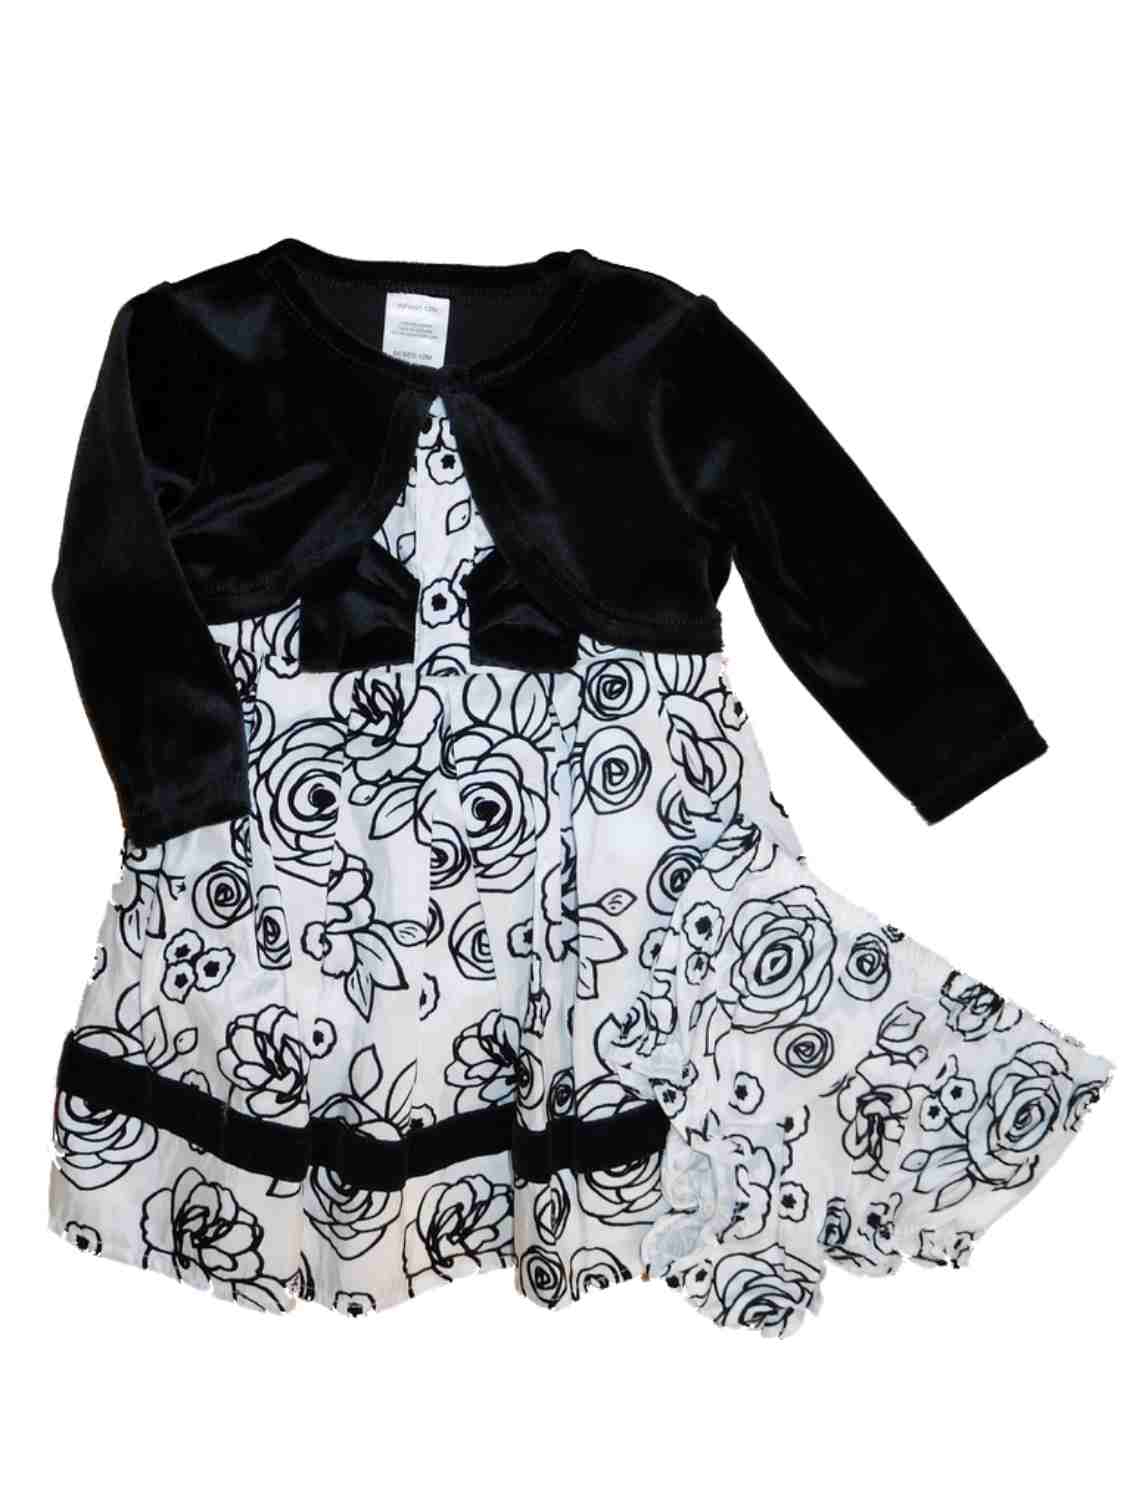 Youngland Infant Baby Girls White & Black Flower Velvety Christmas Holiday Party Dress 24M